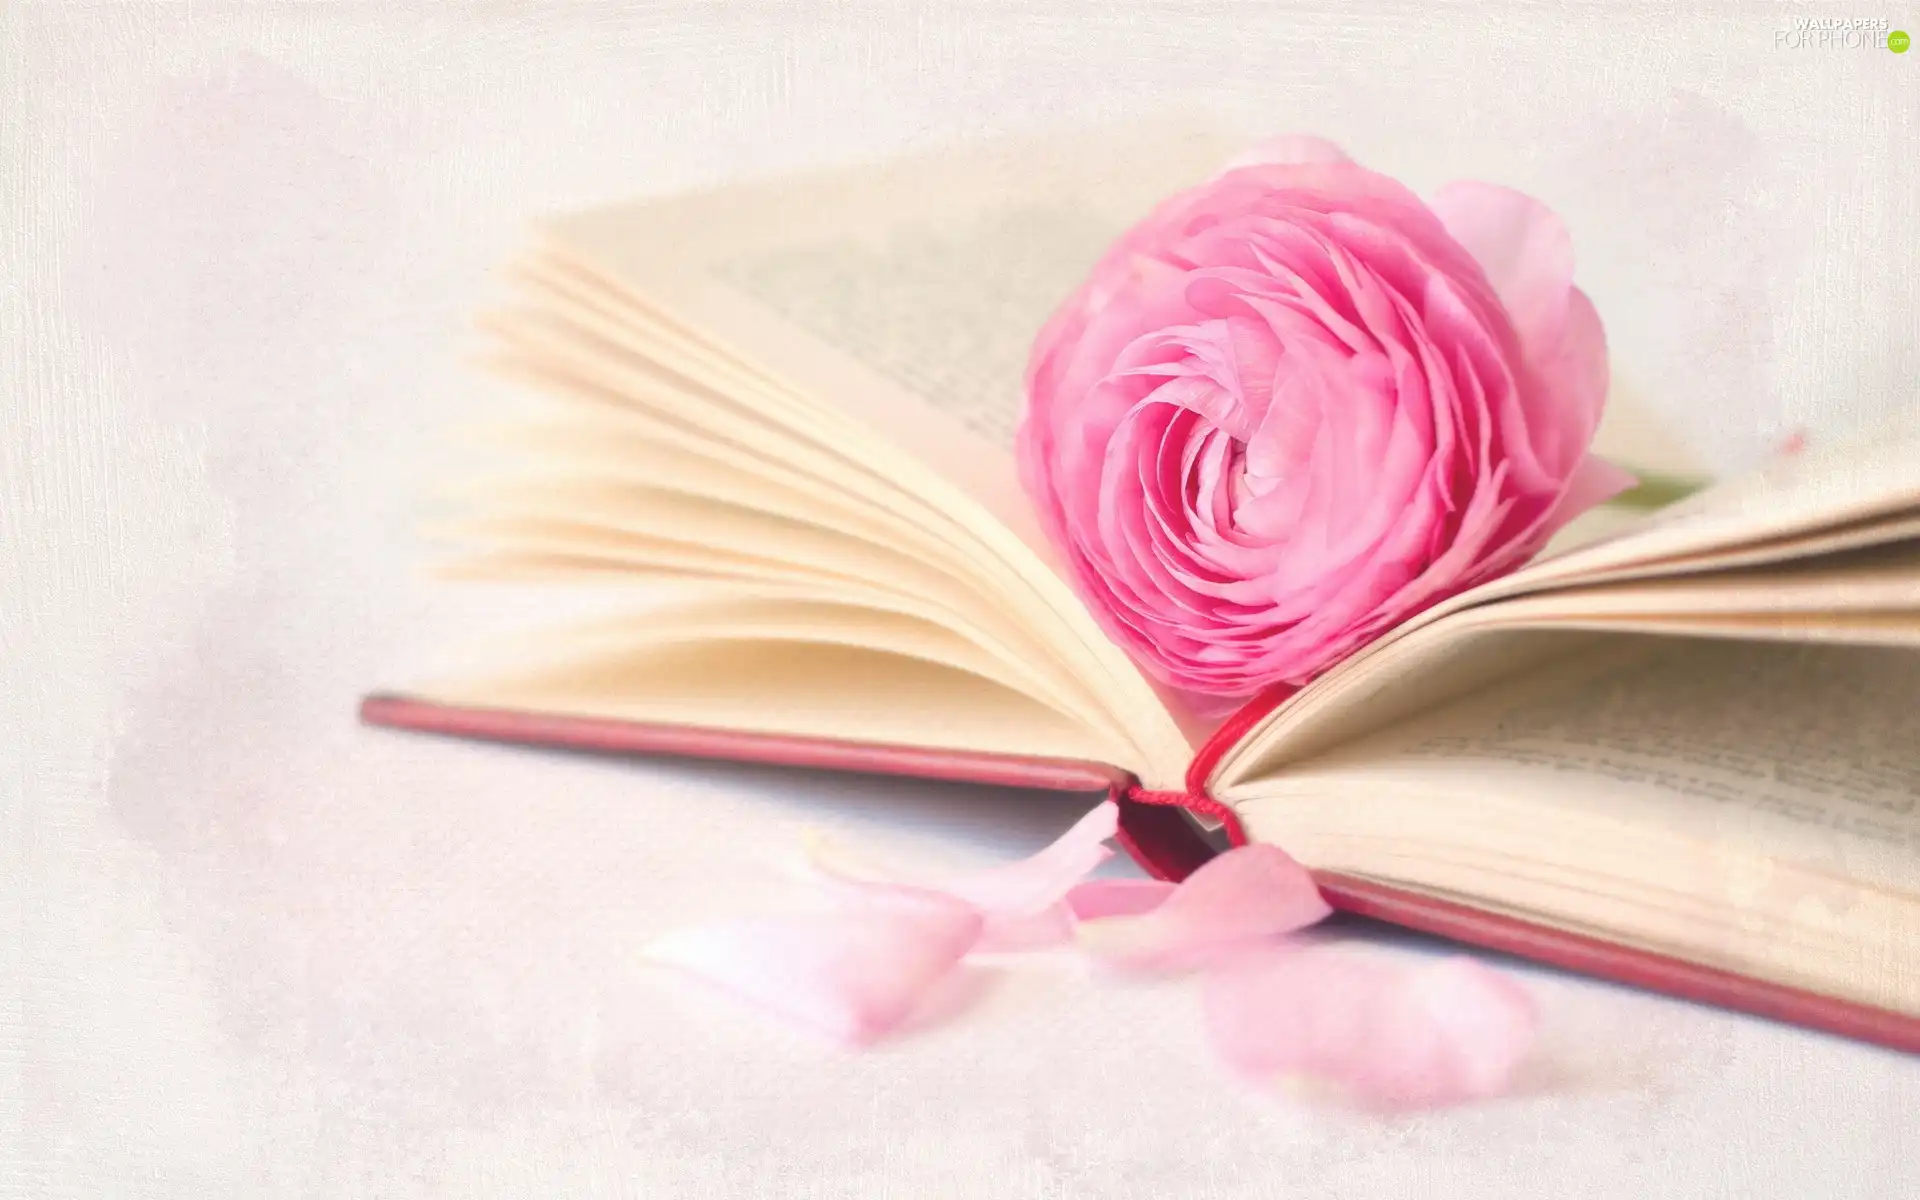 Pink, Spread, Book, rose